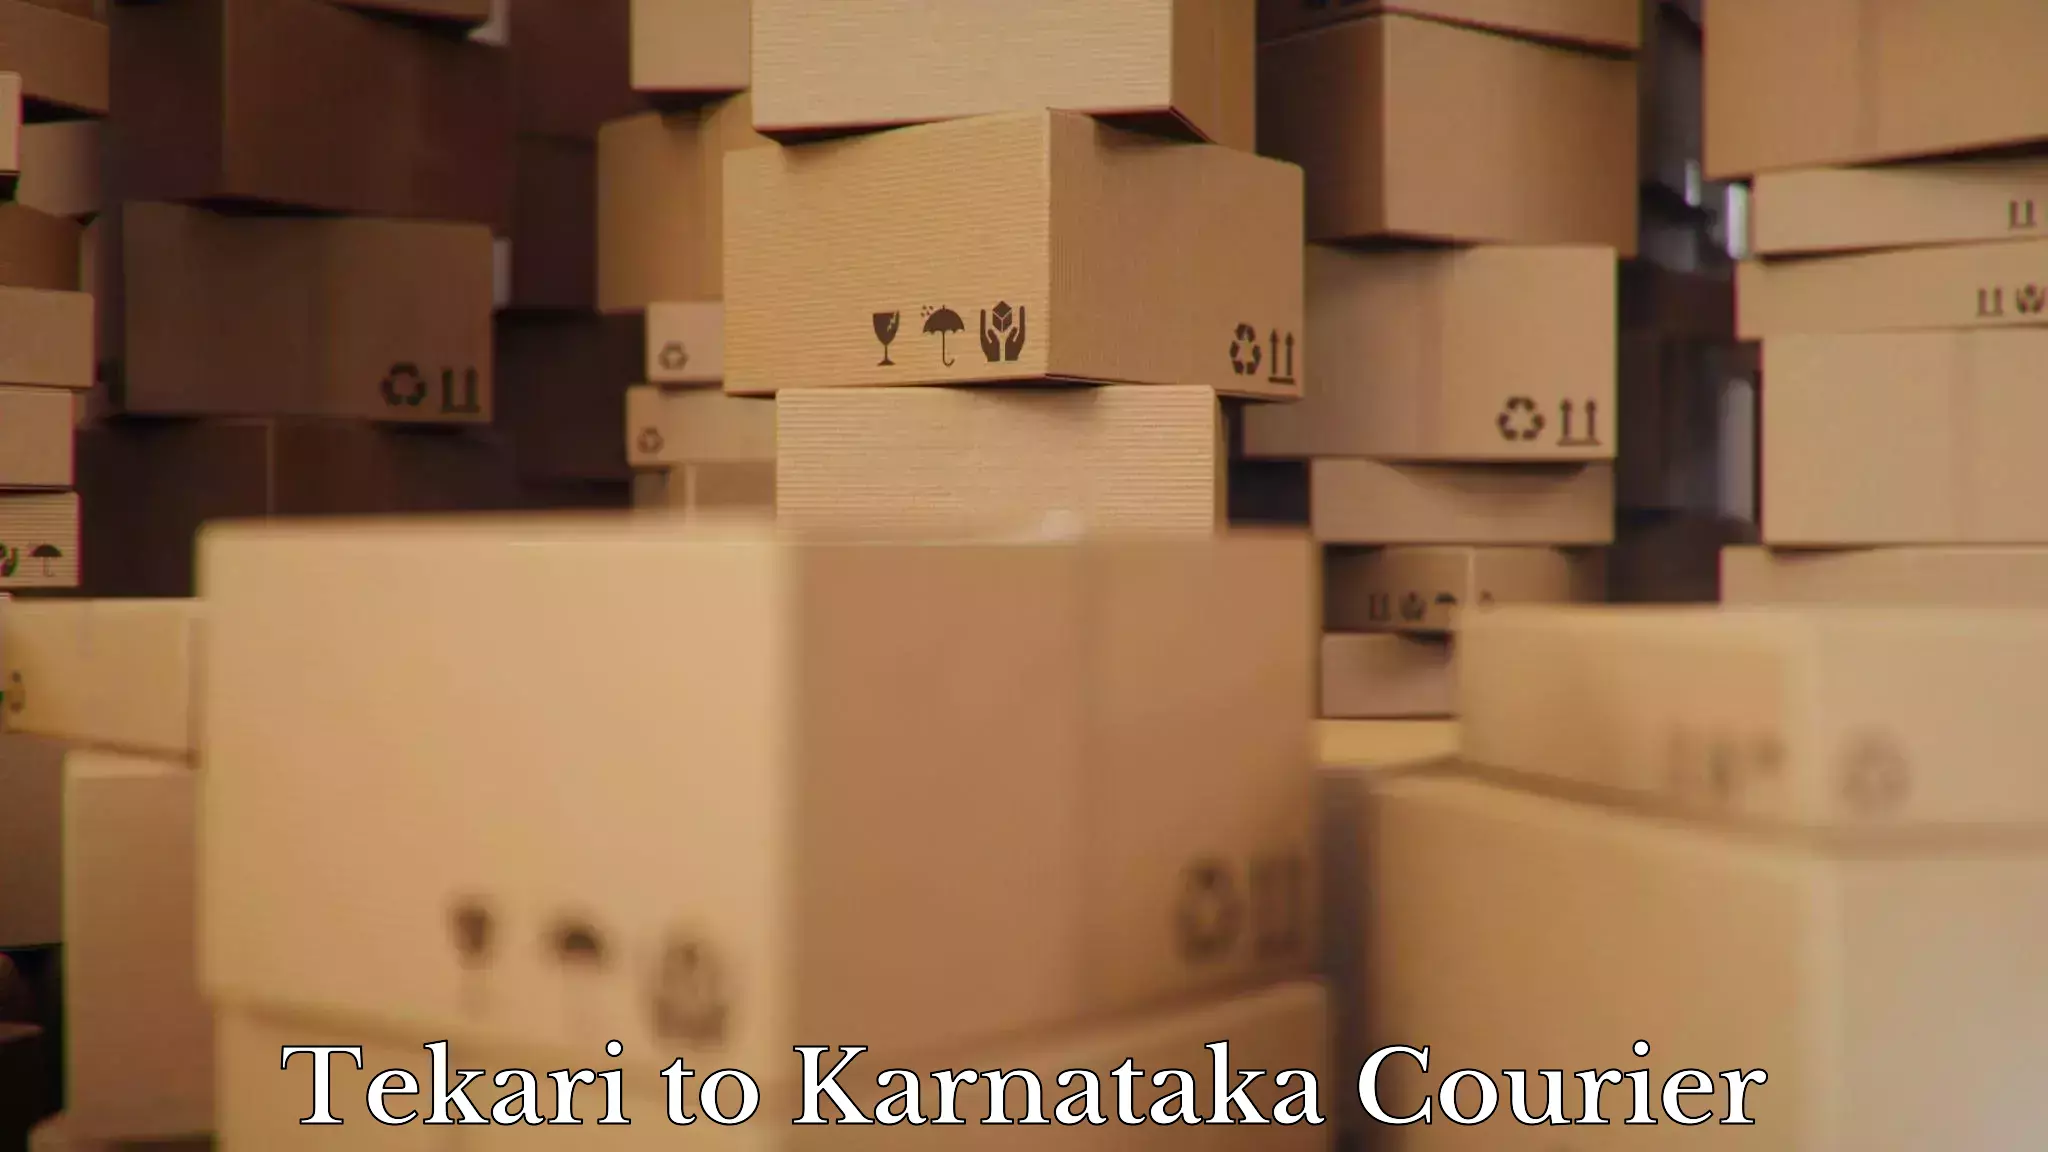 Efficient moving company Tekari to Karnataka